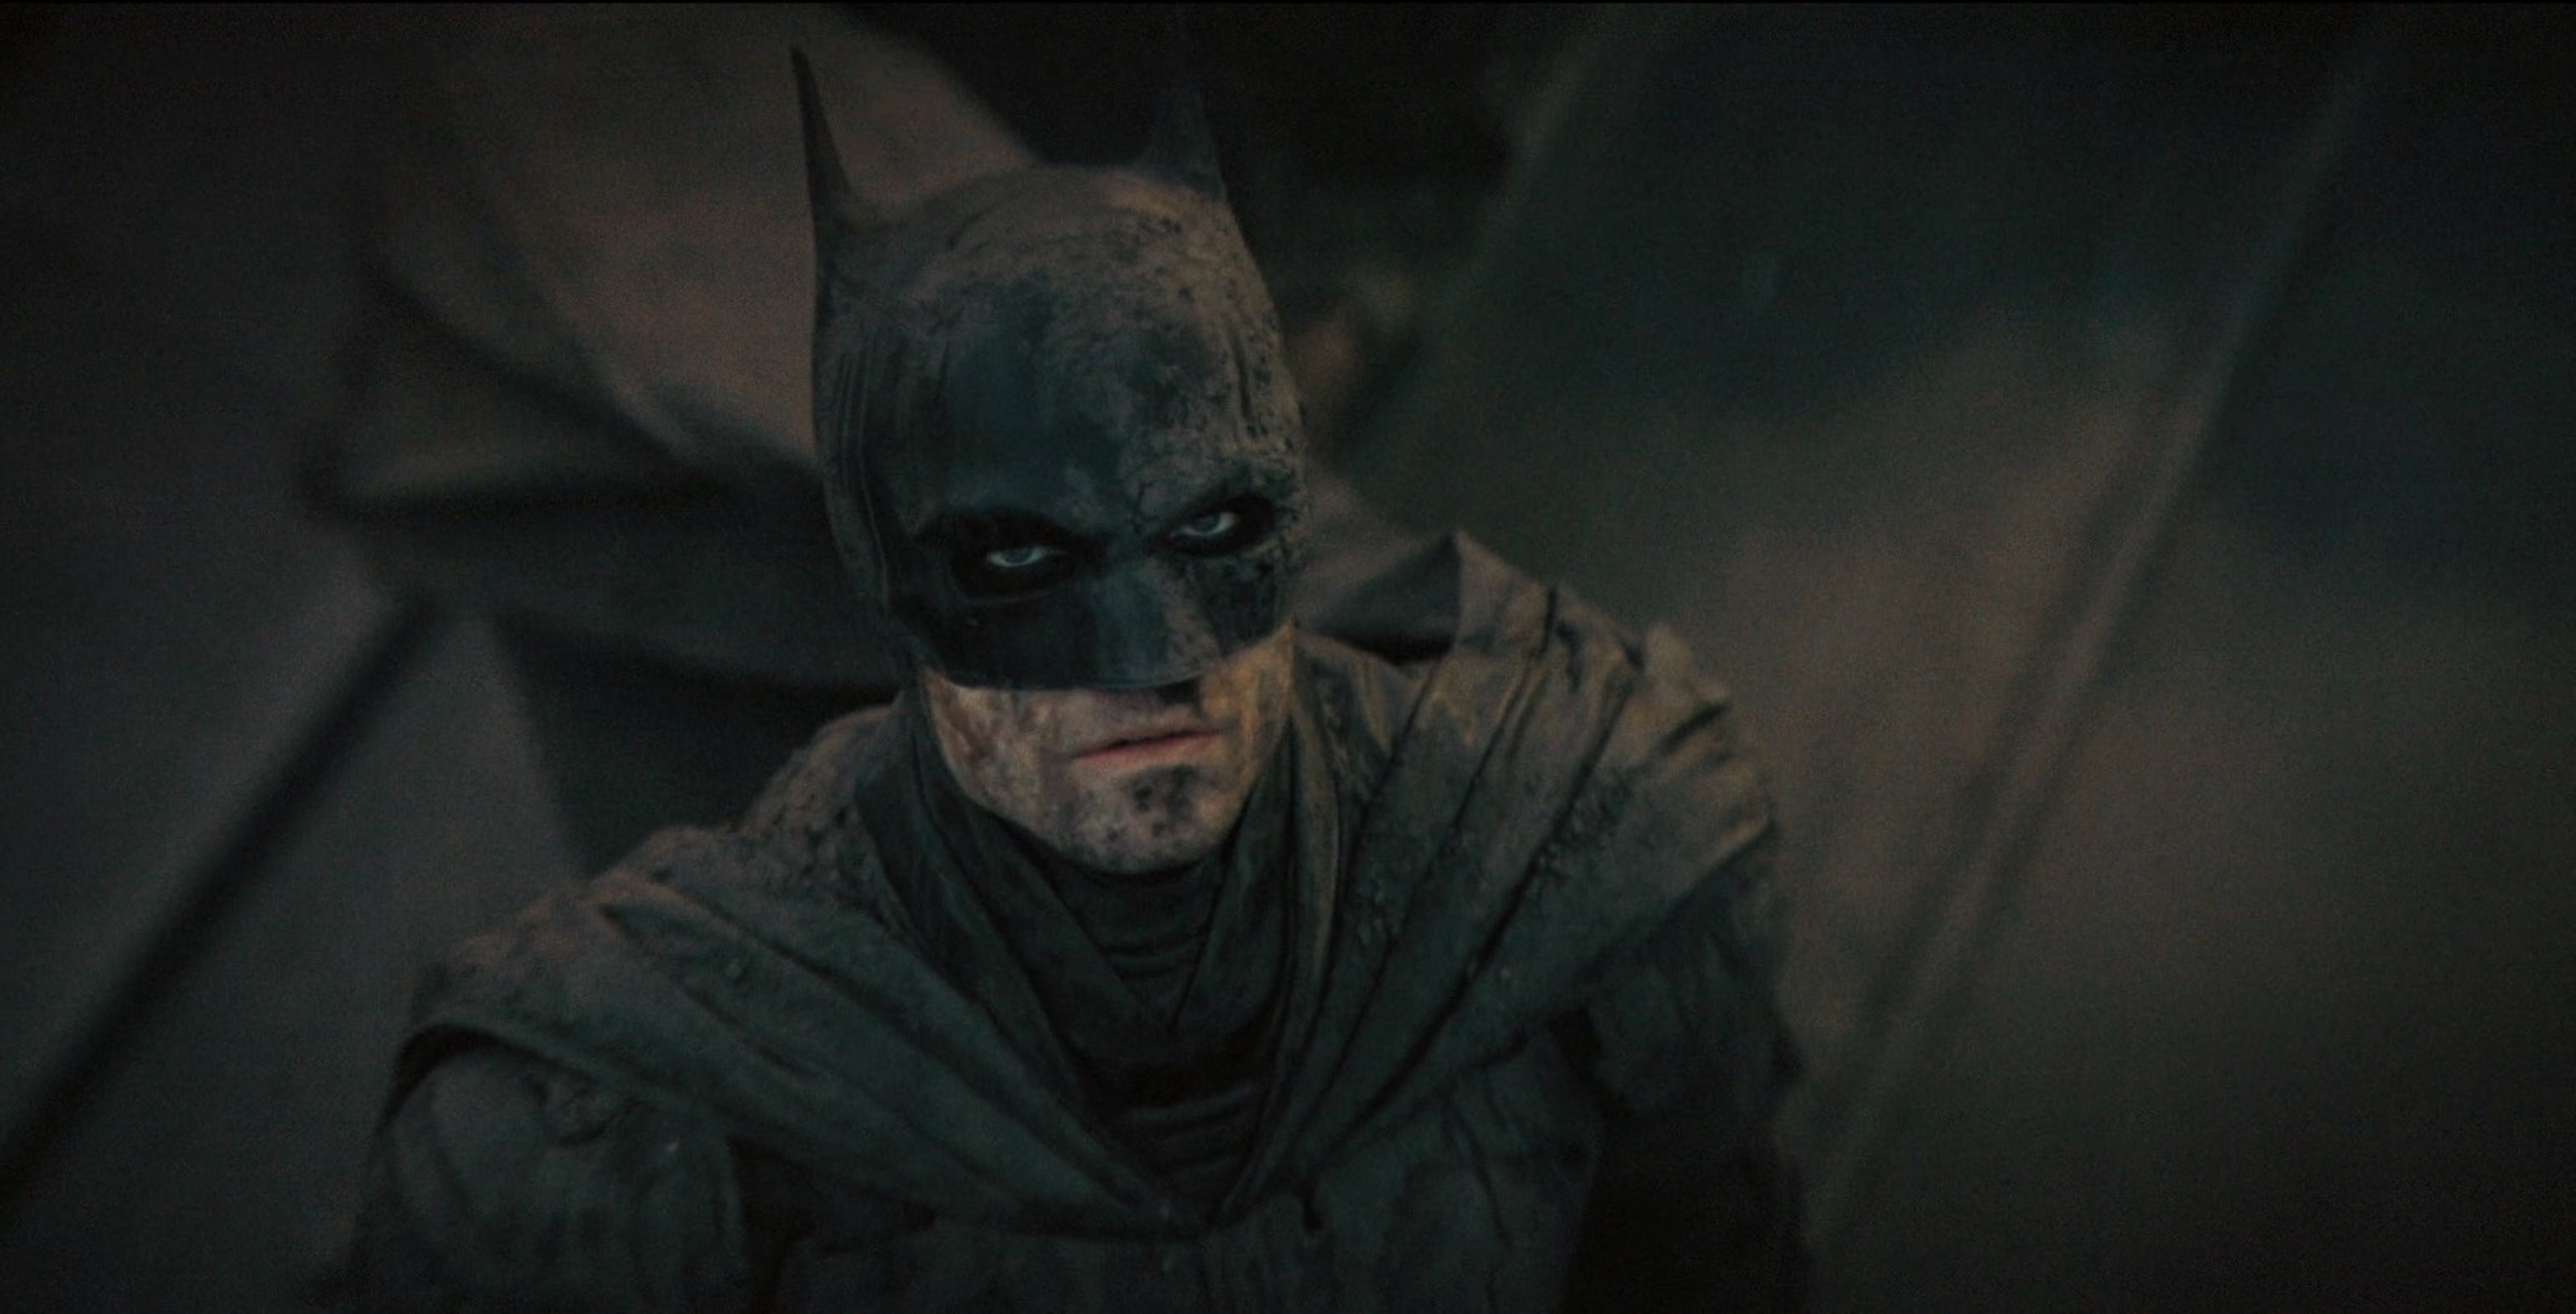 The Batman 2: i villain che vorremmo nel film di Matt Reeves Cover